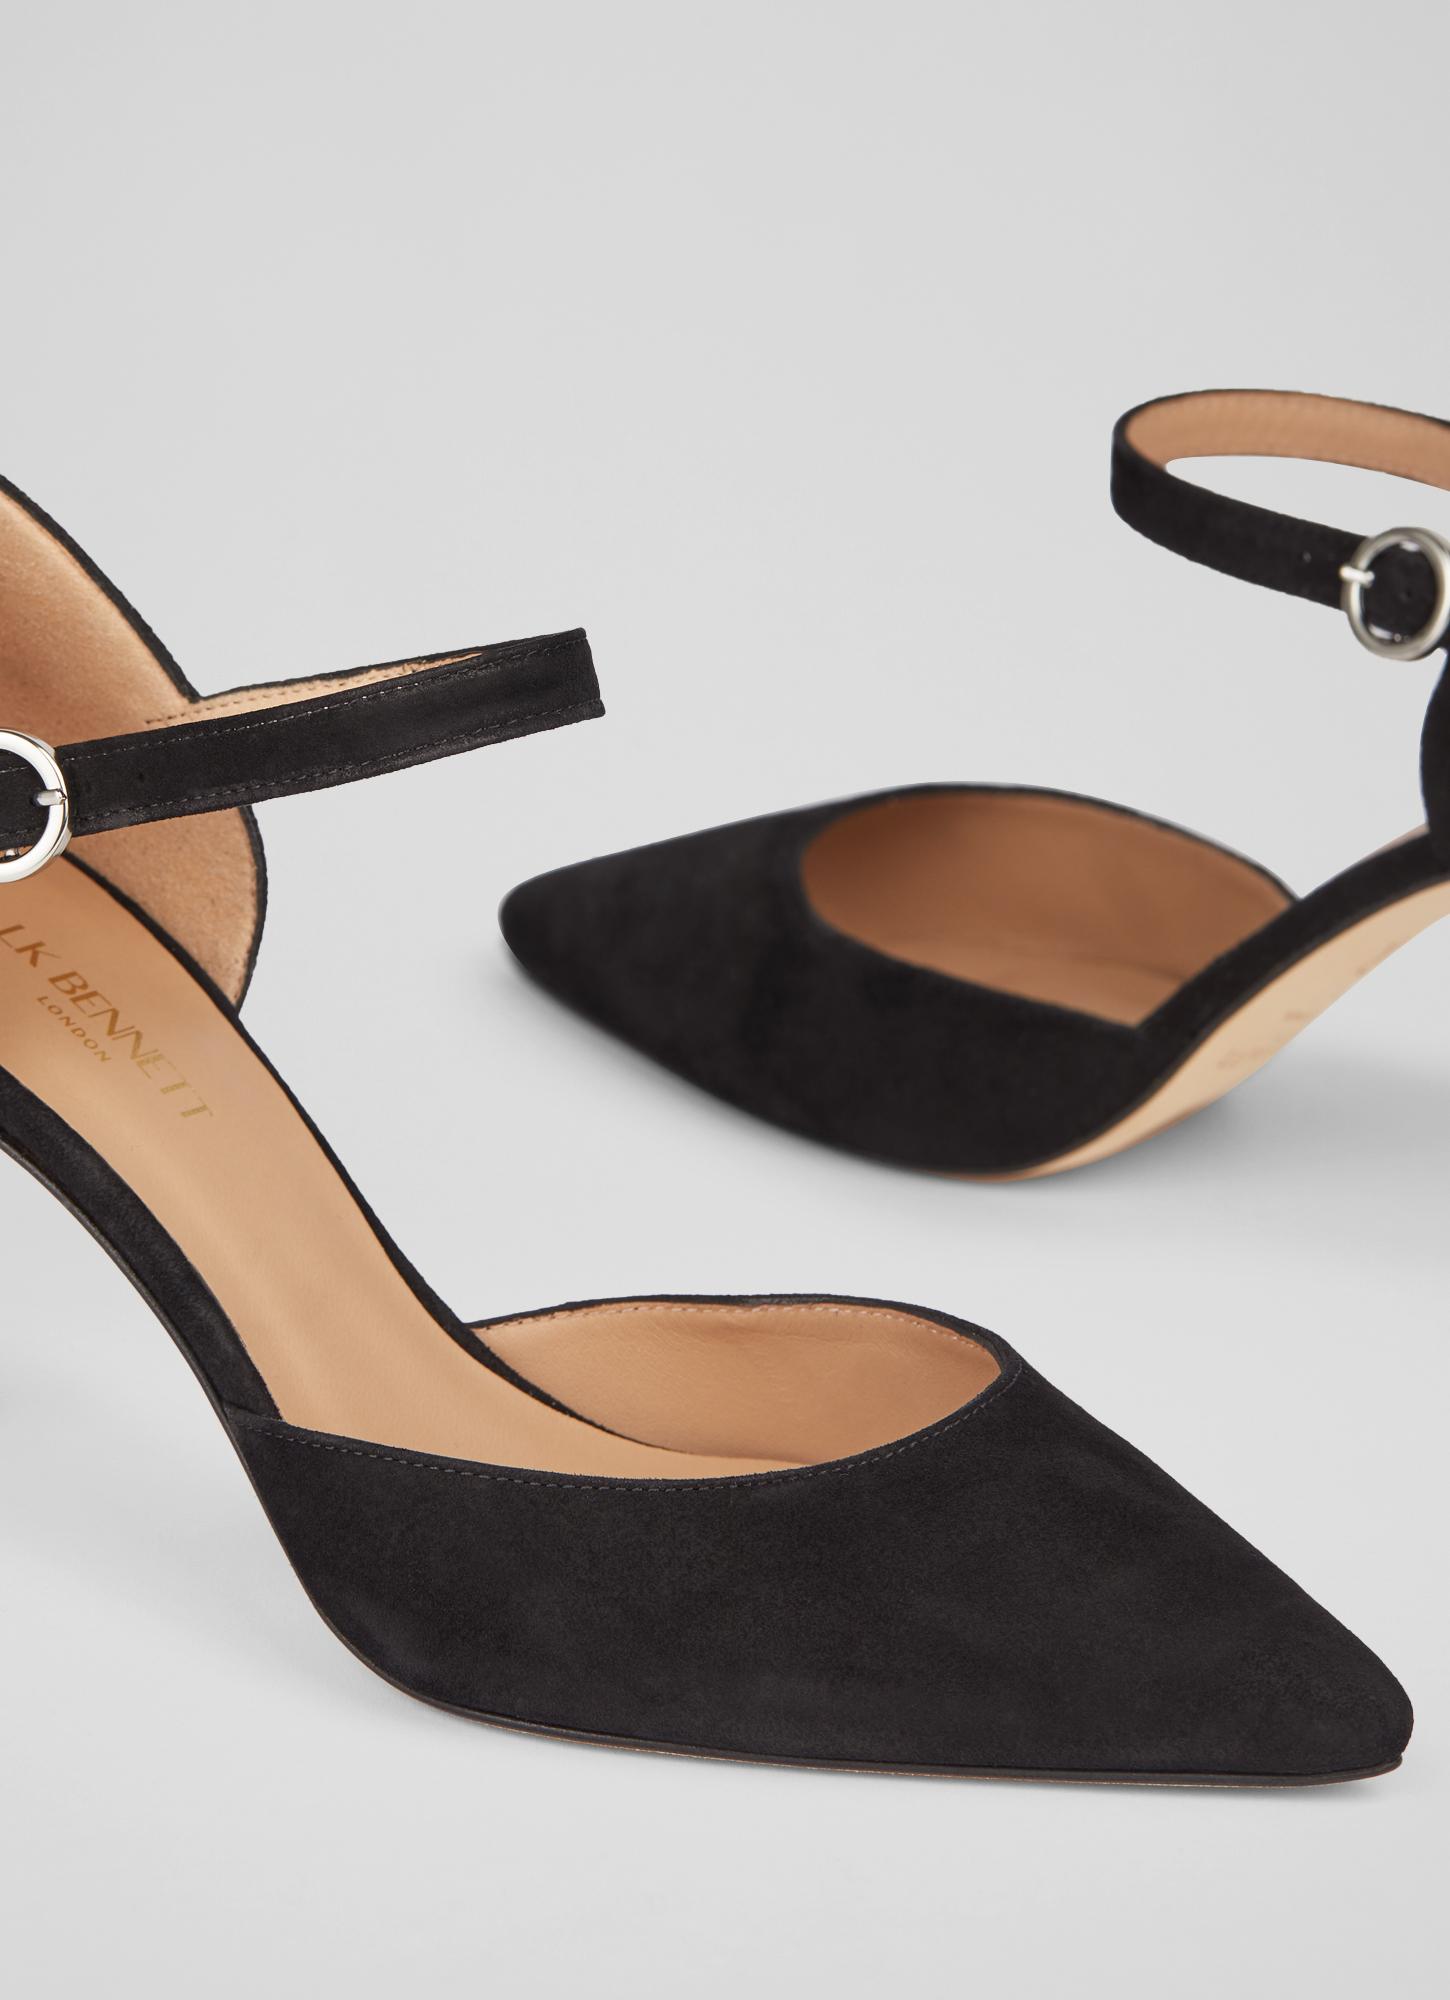 Harper Black Suede Ankle Strap Heels | Fashion heels, Heels, Ankle strap  heels